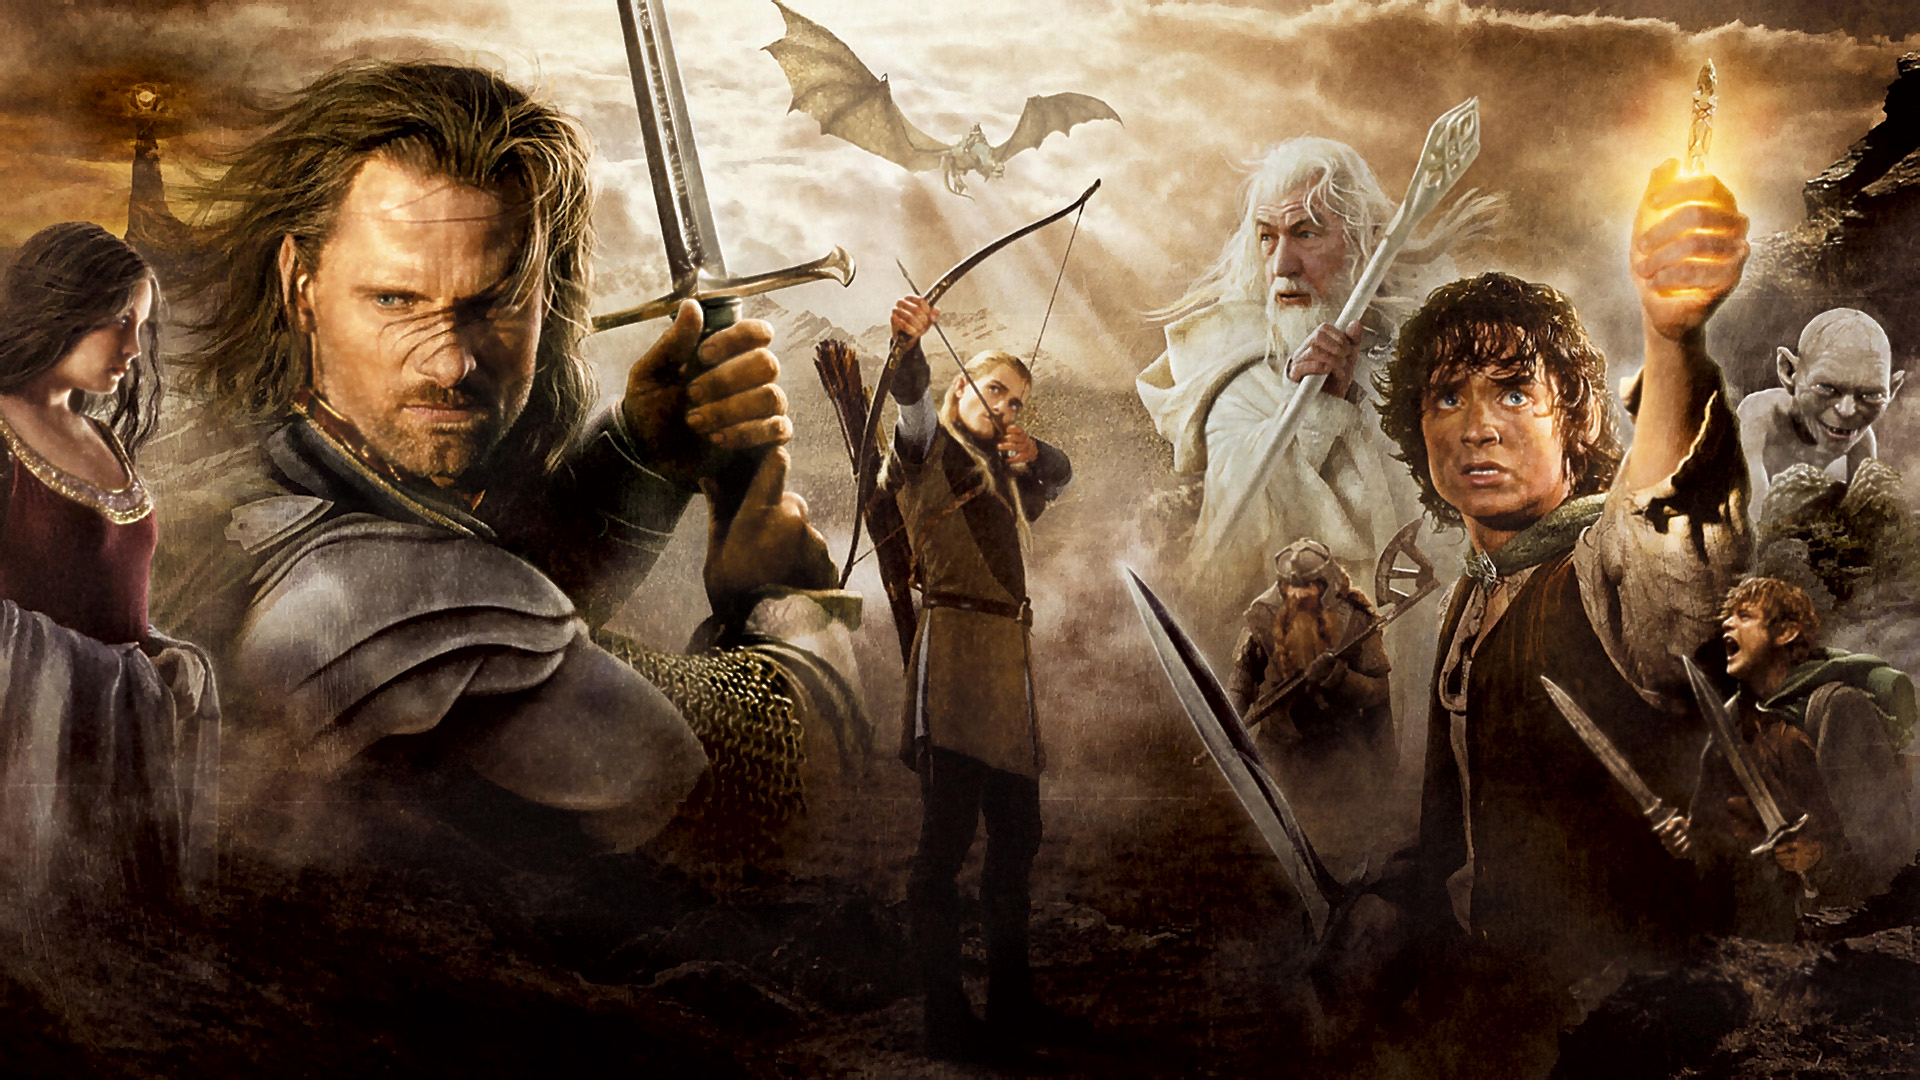 Gandalf, Sauron, The Lord of the Rings, Aragorn, Gollum, Gimli, nazgul, Legolas, Arwen Undomiel, Samwise Gamgee, The Return of the King, Frodo Baggins - desktop wallpaper